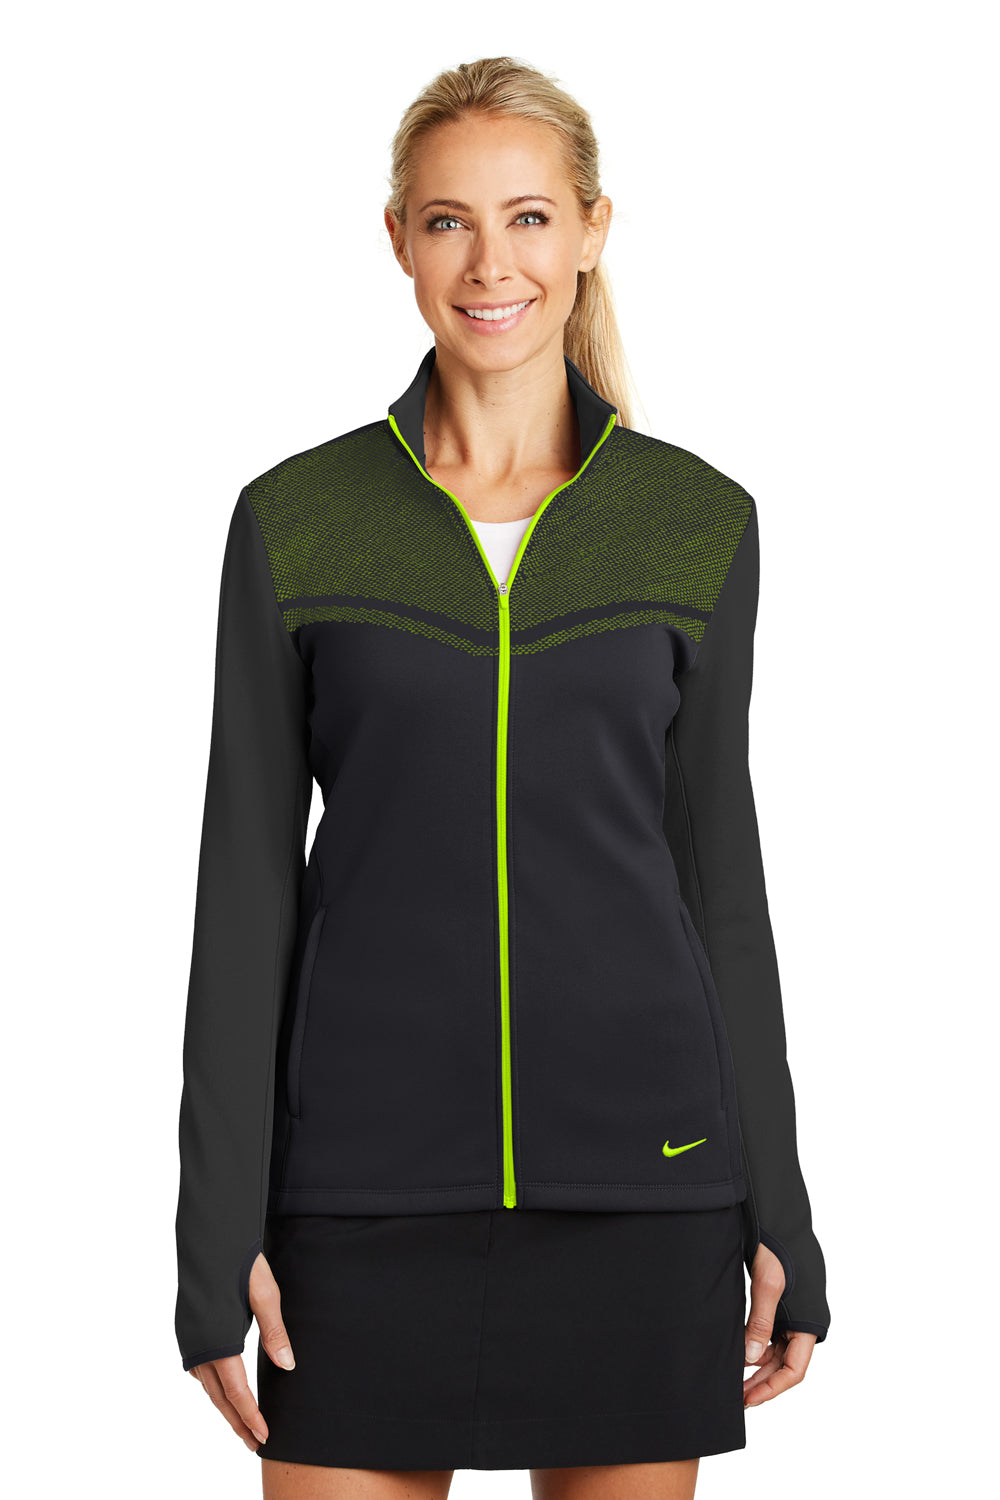 Nike 779804 Womens Hypervis Therma-Fit Moisture Wicking Full Zip Sweatshirt Black/Volt Green Front